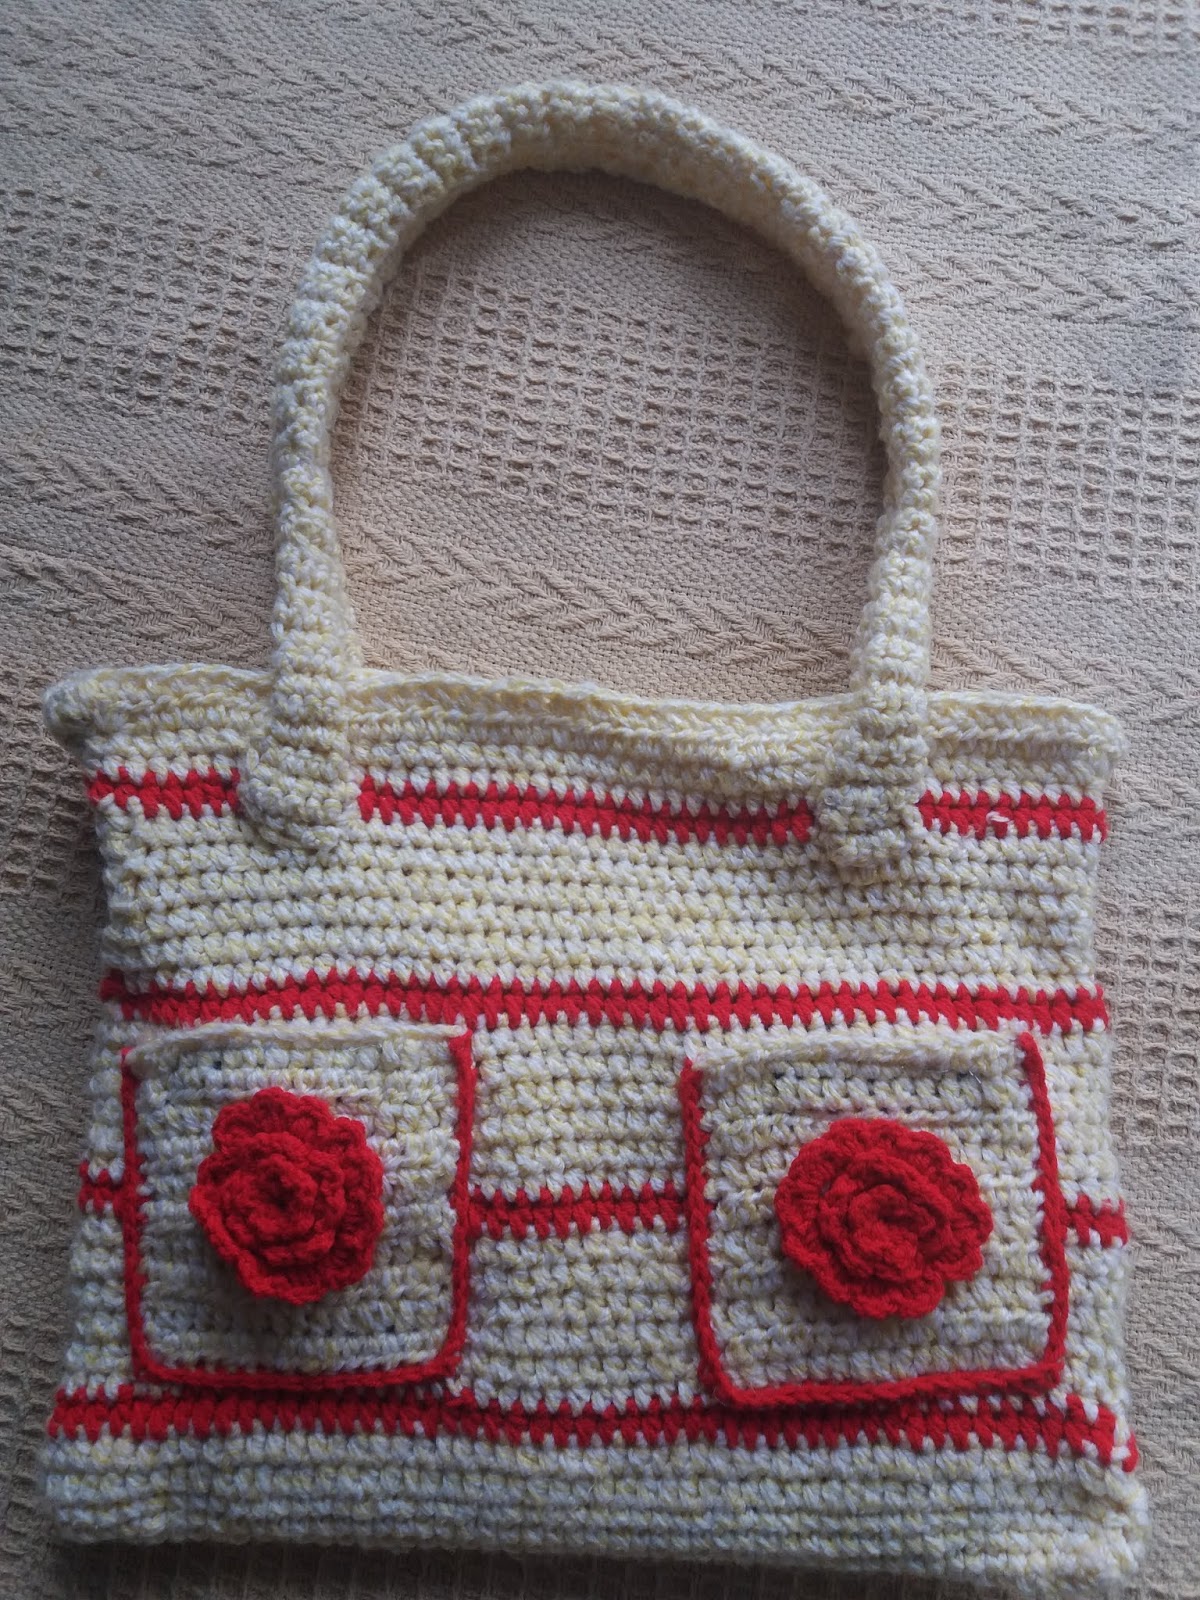 Crochet Patterns Galore - Tote Bag